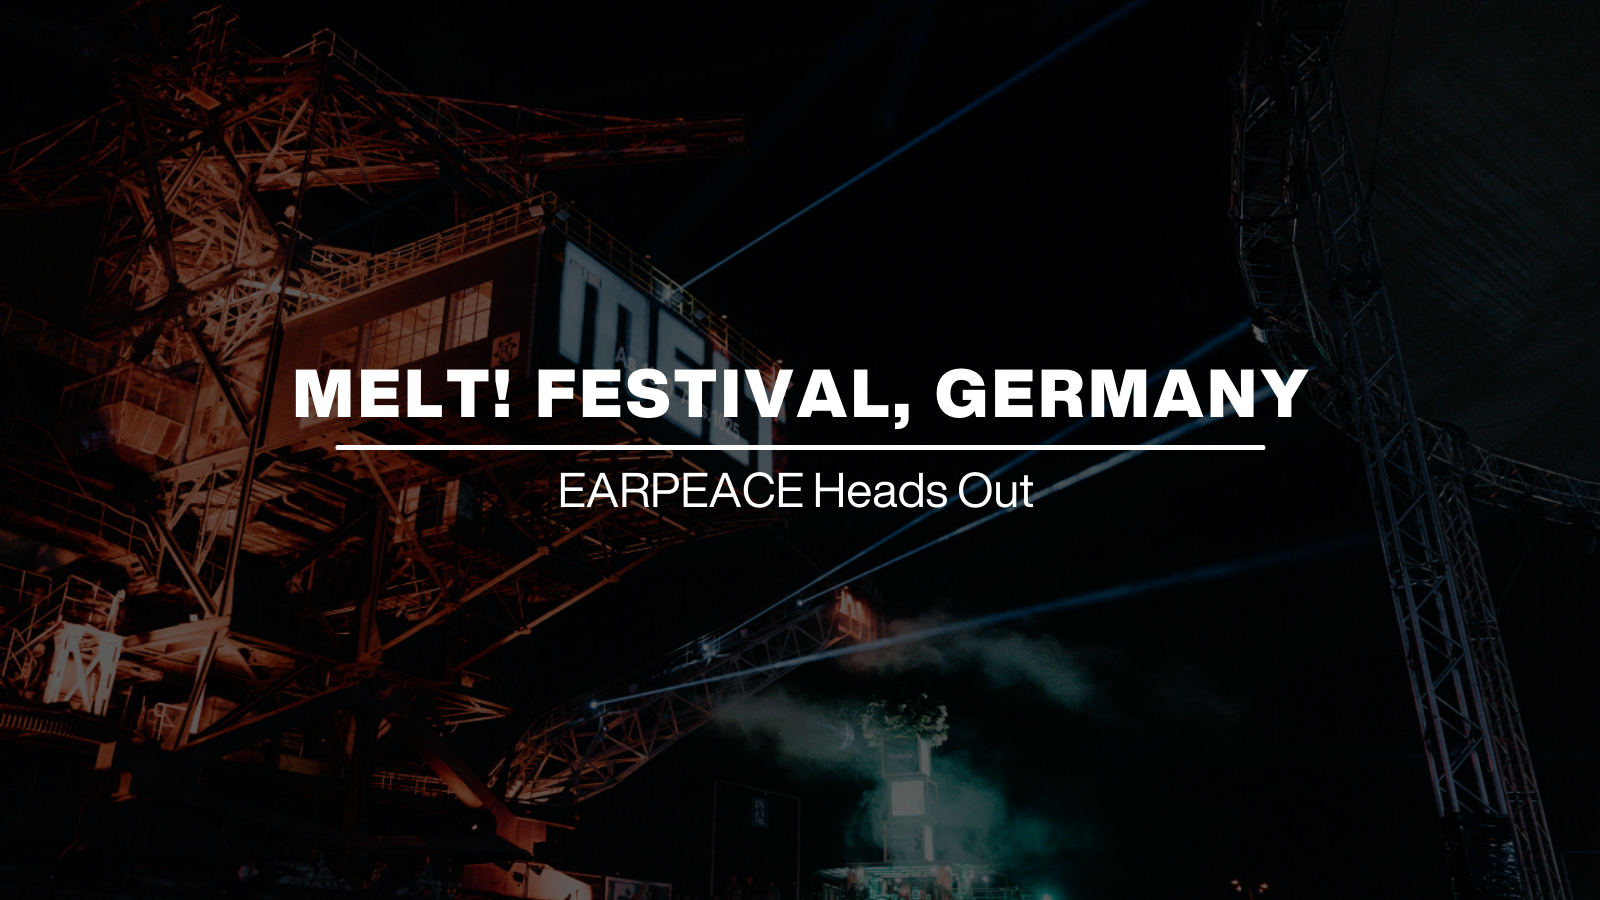 At Melt! Festival Ferroplis Germany